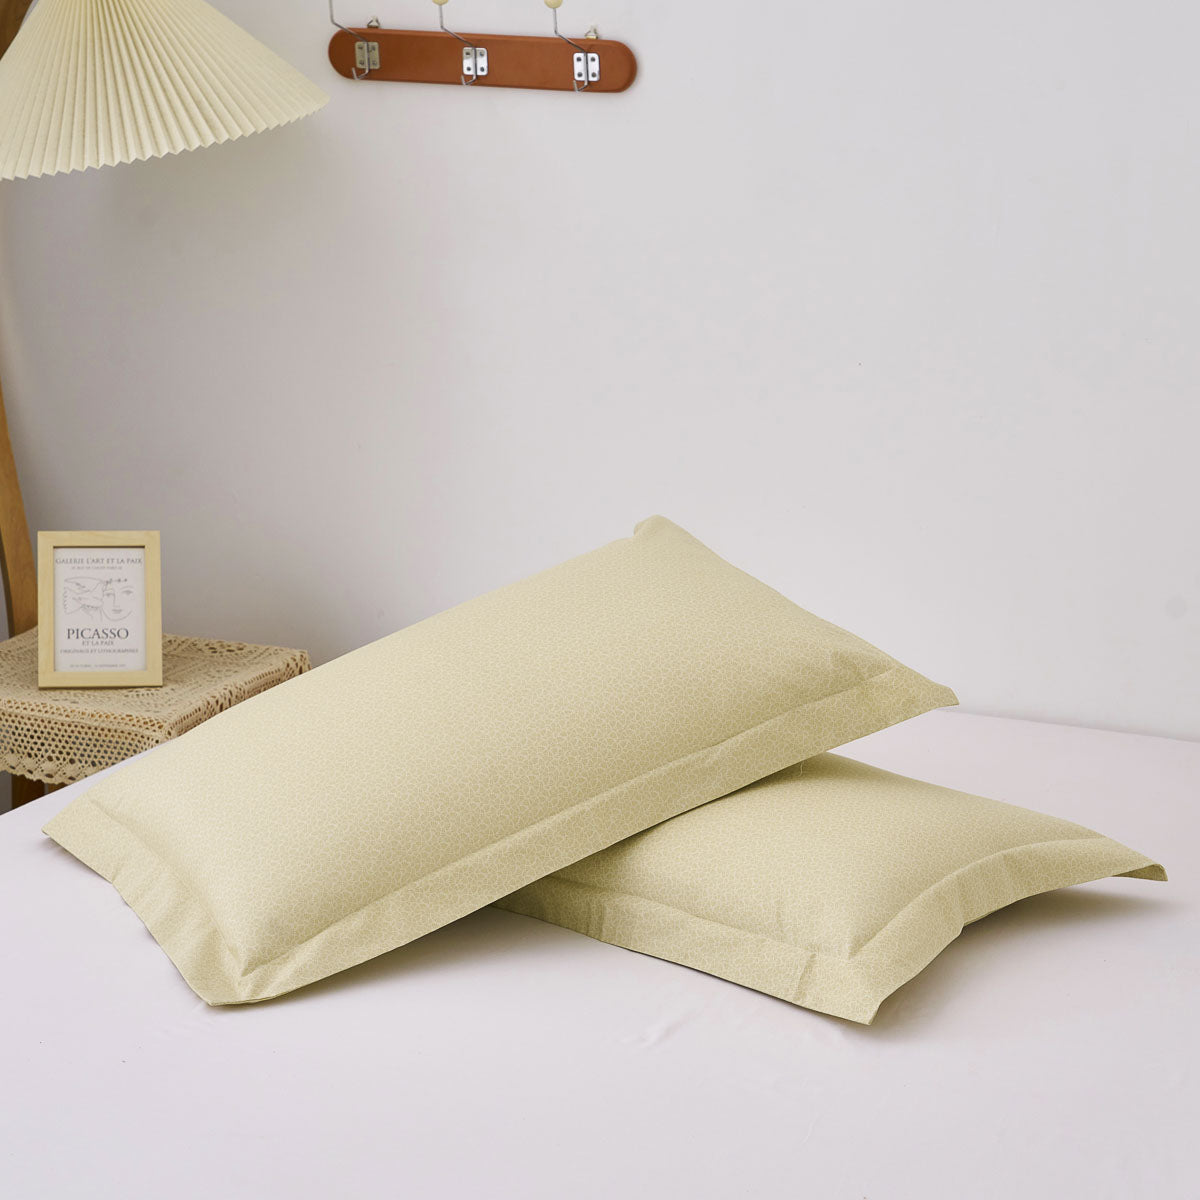 Psi-Tender Yellow Pattern Cotton Pillow Sham